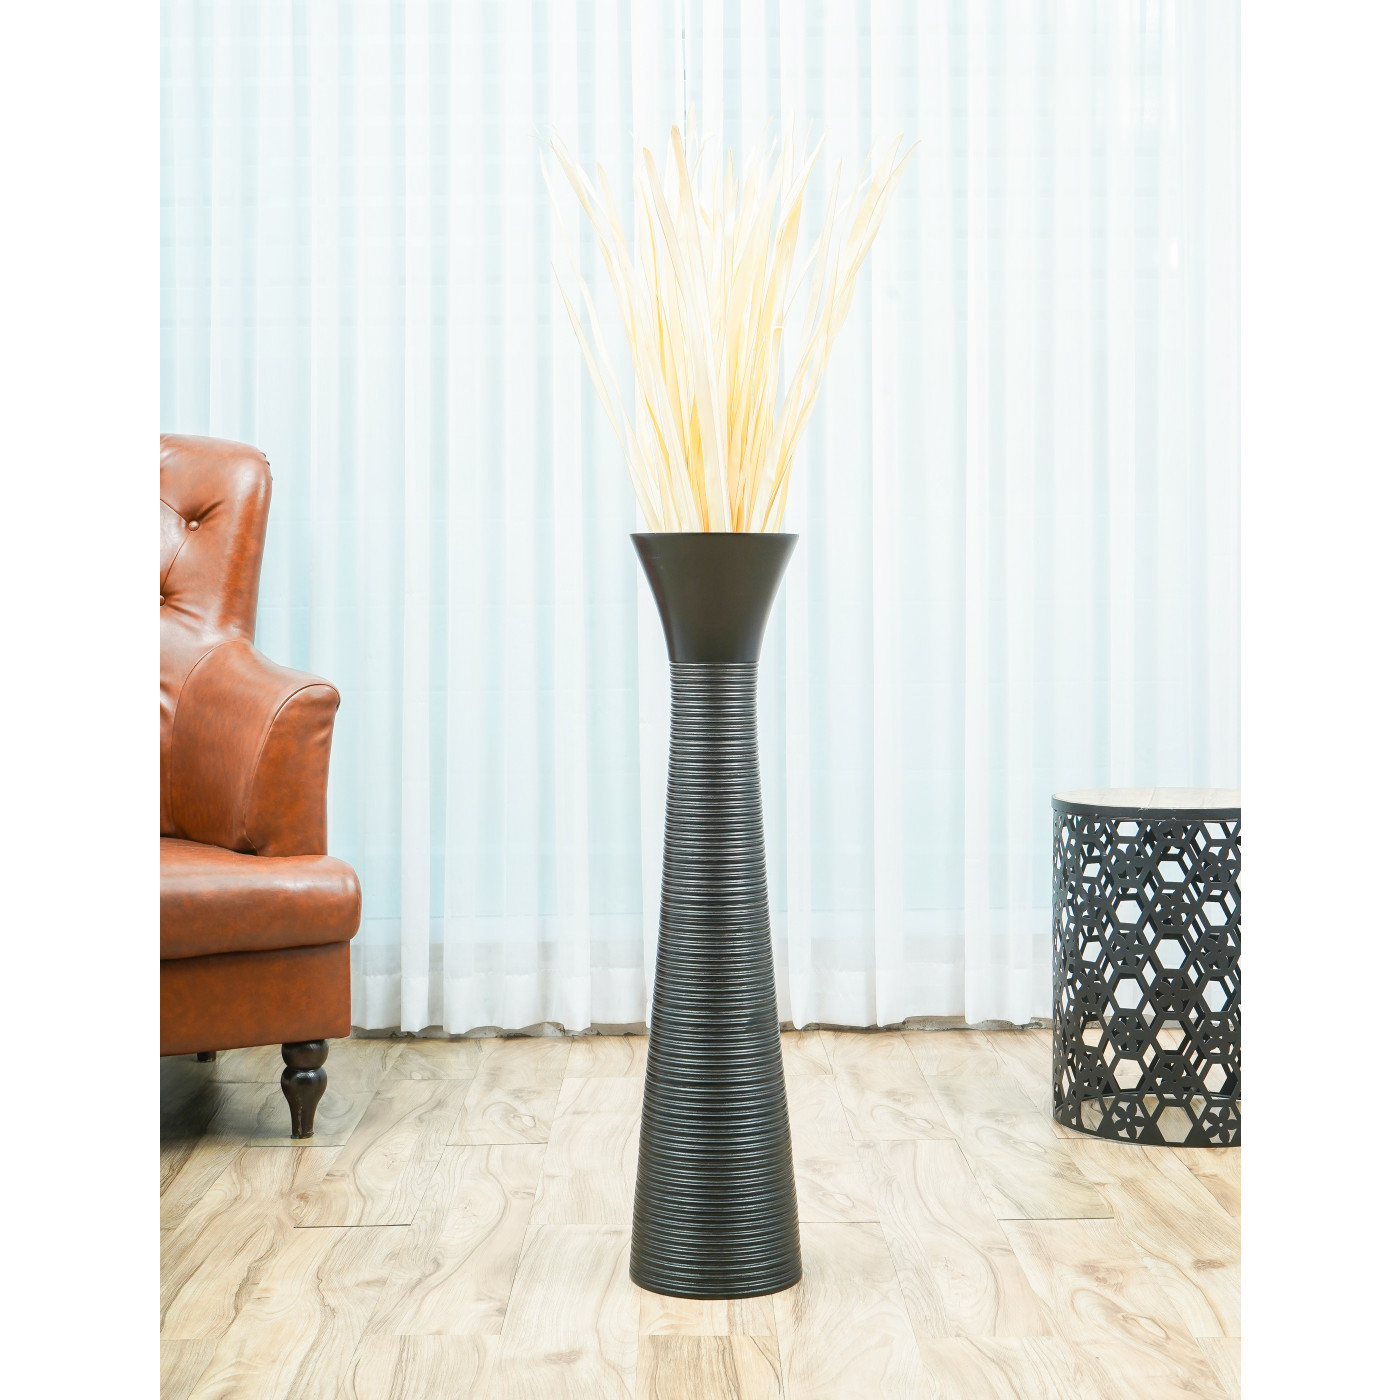 Leewadee Large Black Home Decor Floor Vase – Wooden 36 inches Tall  Farmhouse Decor Flower Holder For